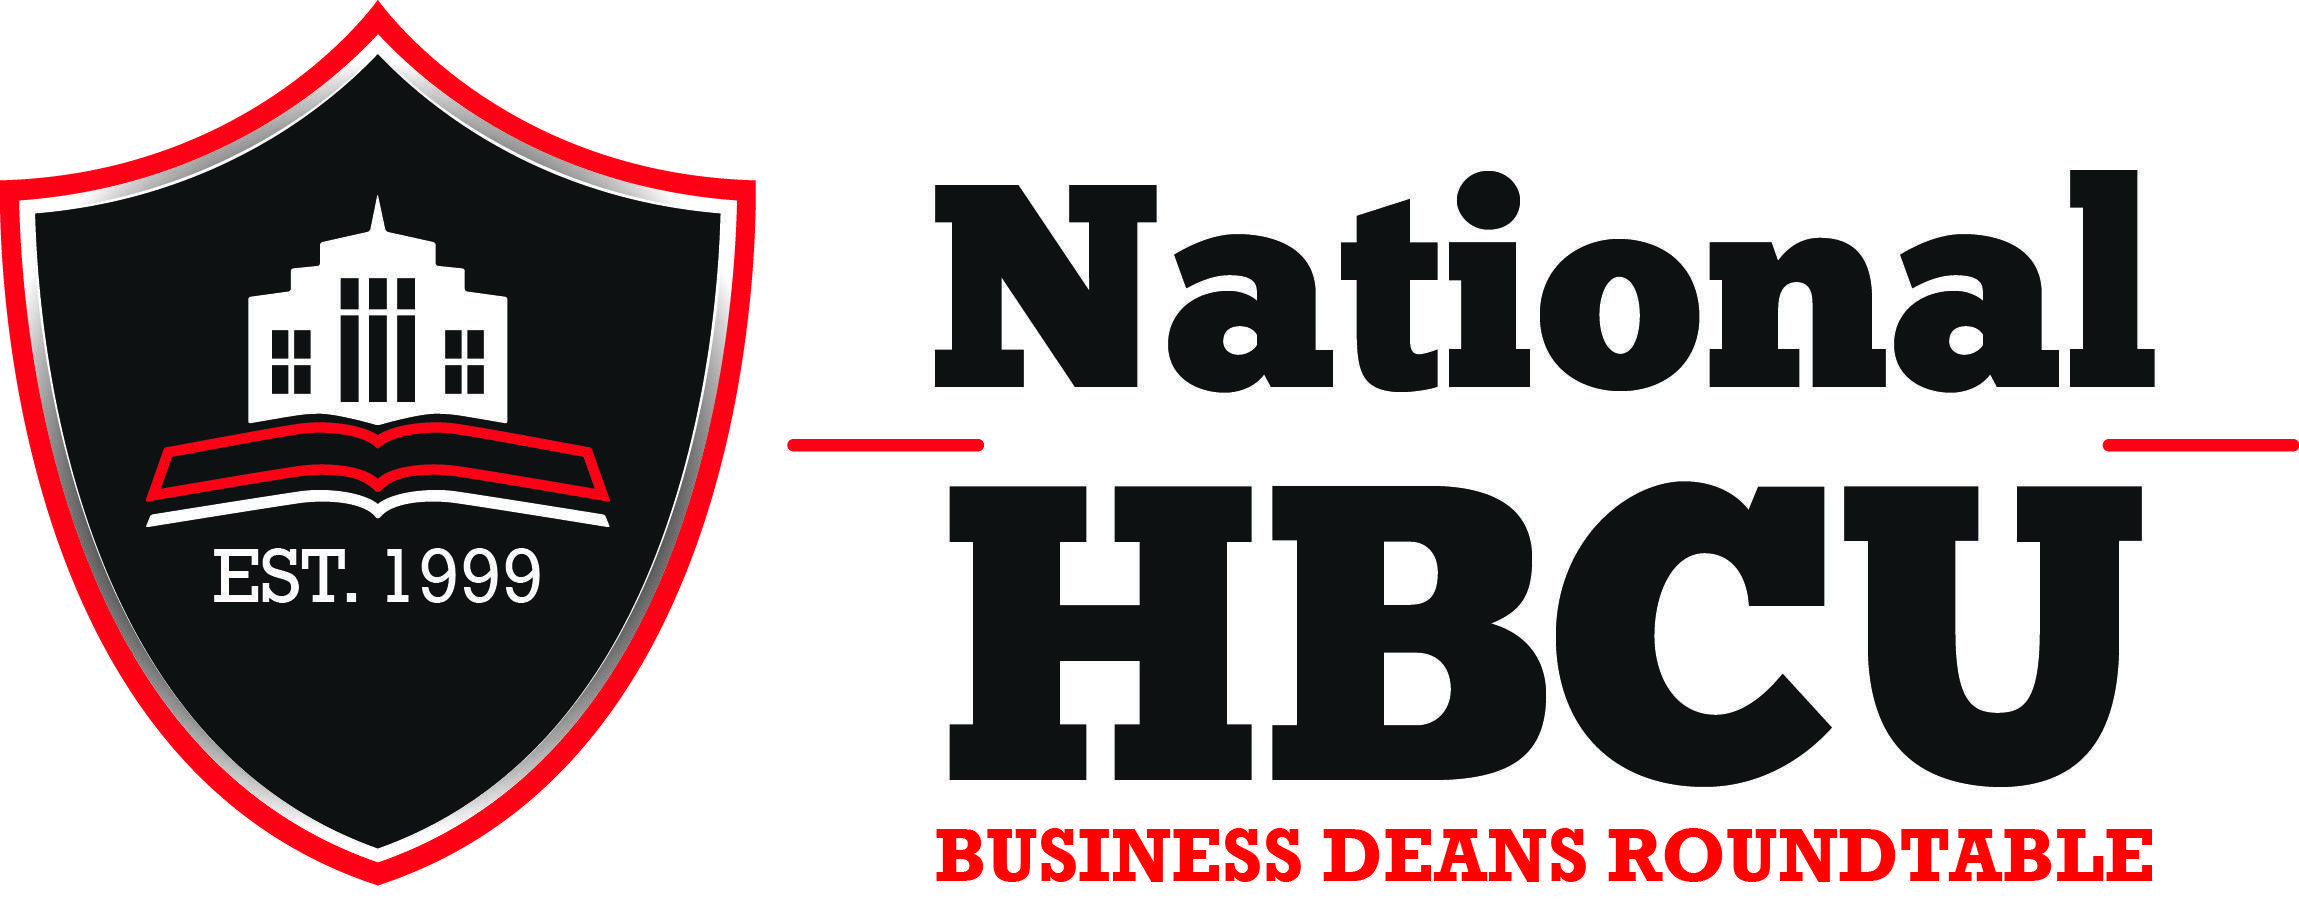 HBCU Logo - About Us HBCU. Business Deans Roundtable